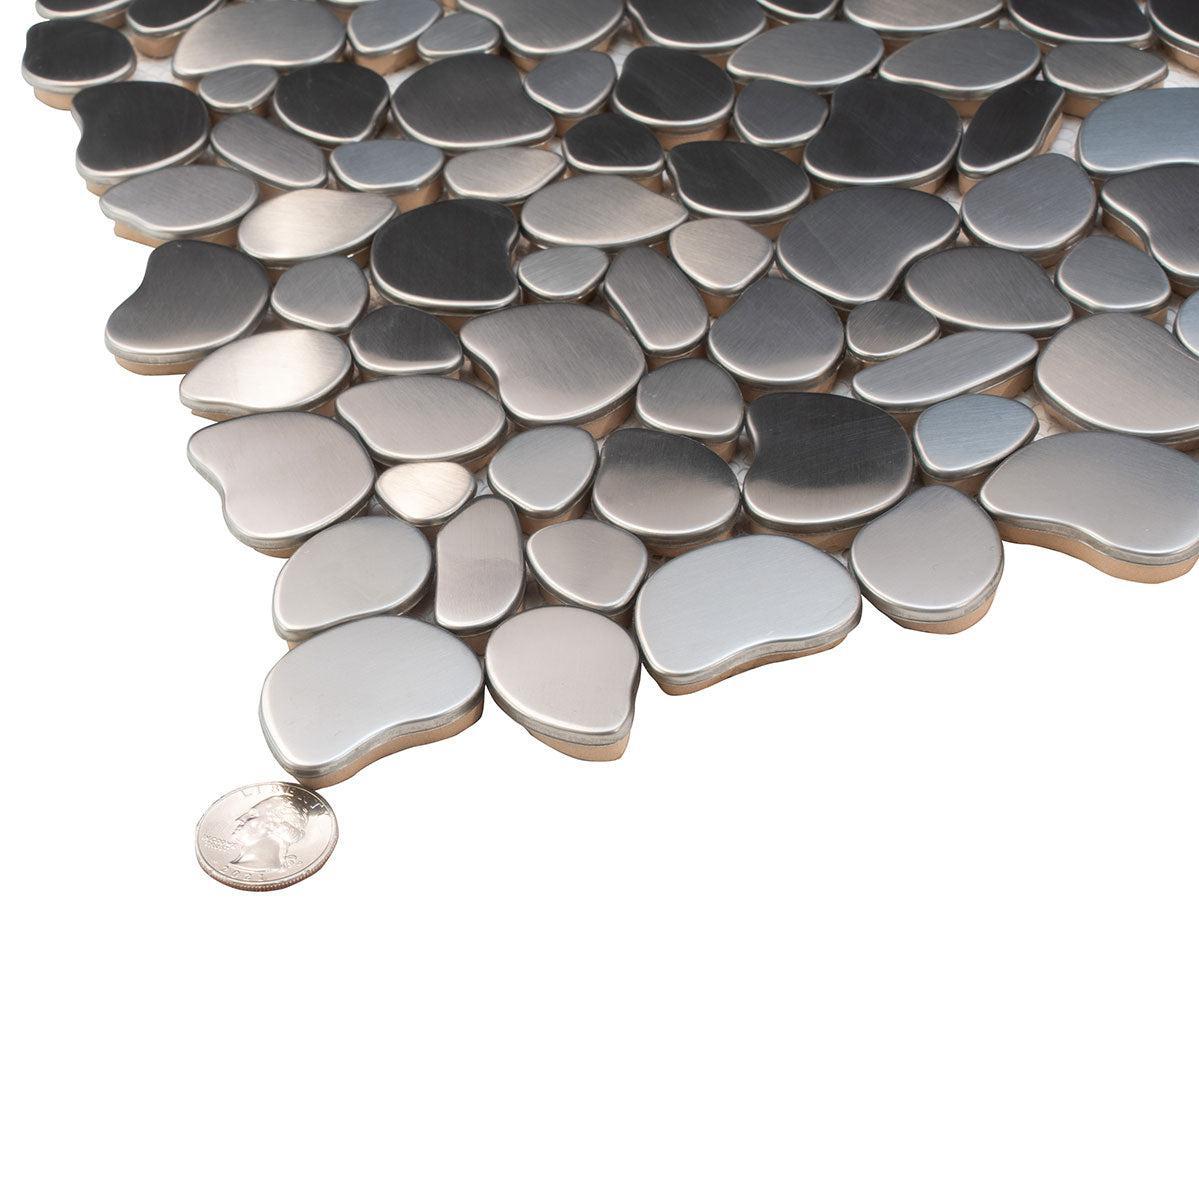 Stainless Steel Pebble Metal Mosaic Tile